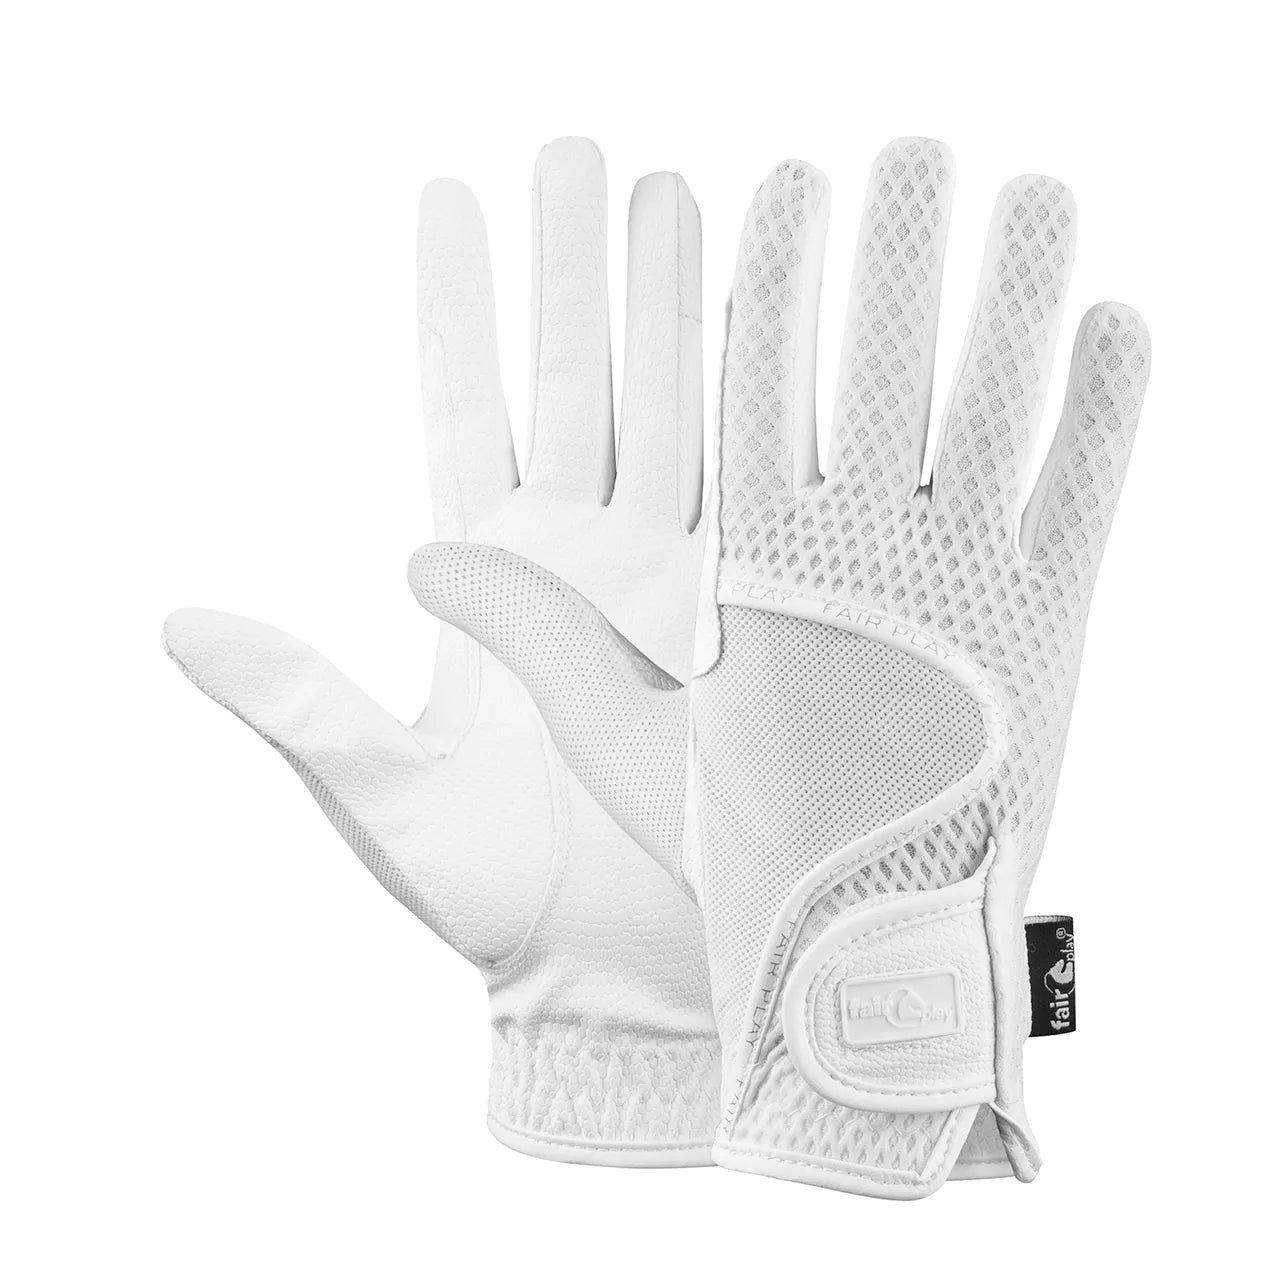 Fair Play Lola Gloves - White or Black